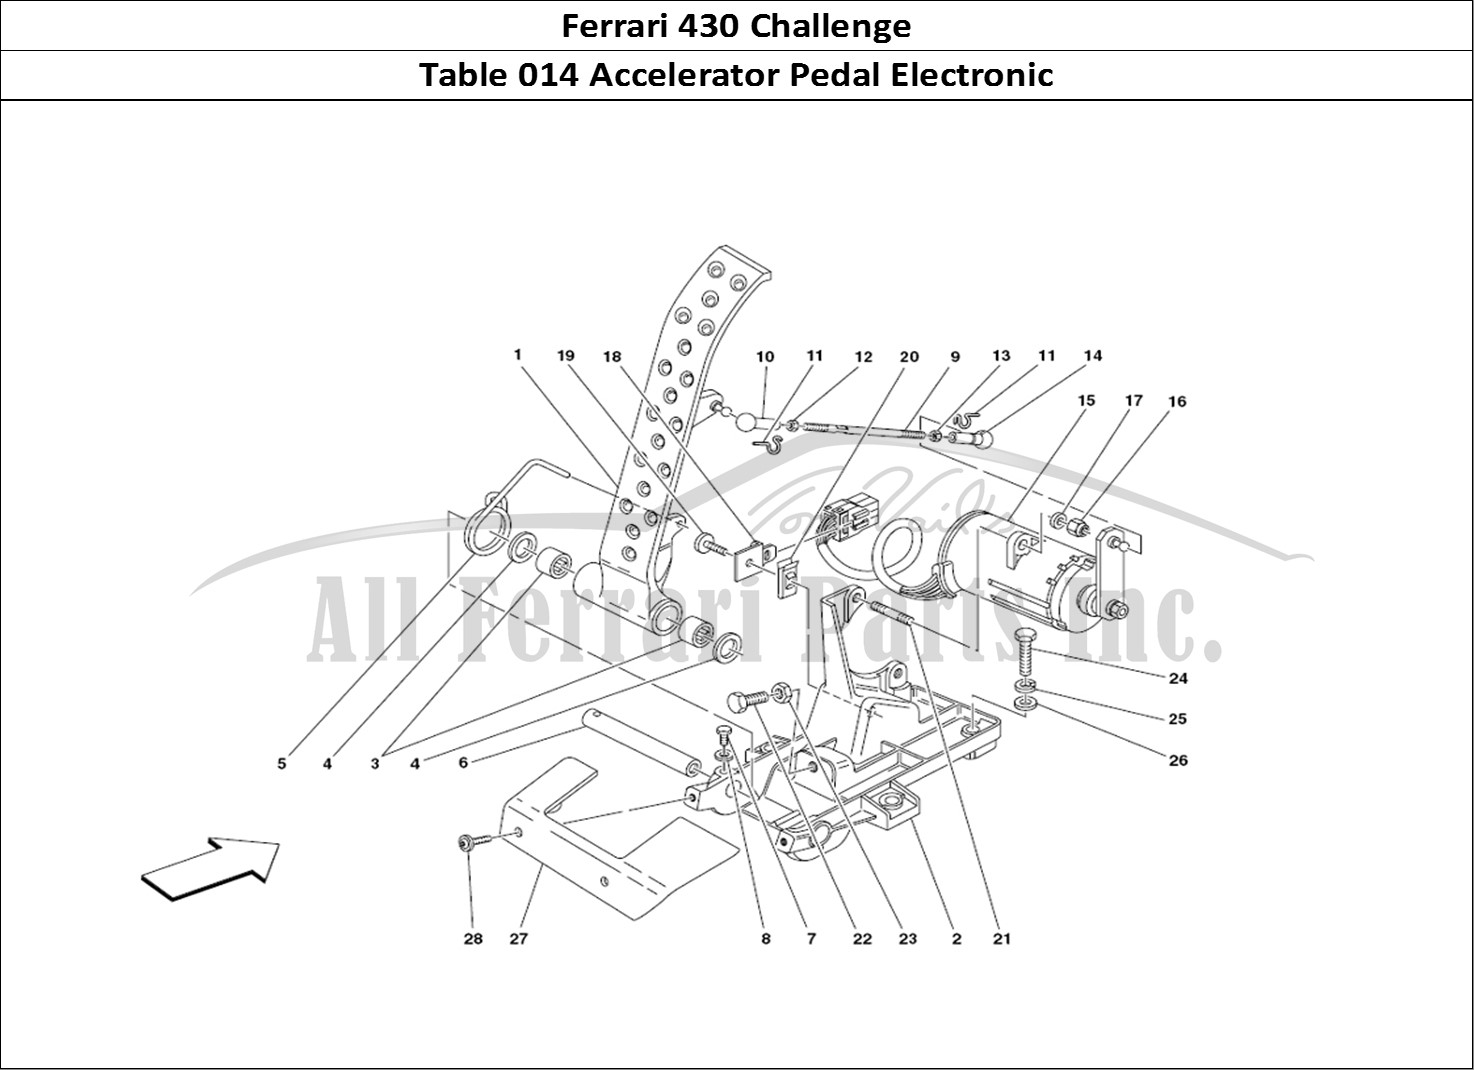 Ferrari Parts Ferrari 430 Challenge (2006) Page 014 Electronic Accelerator Pe